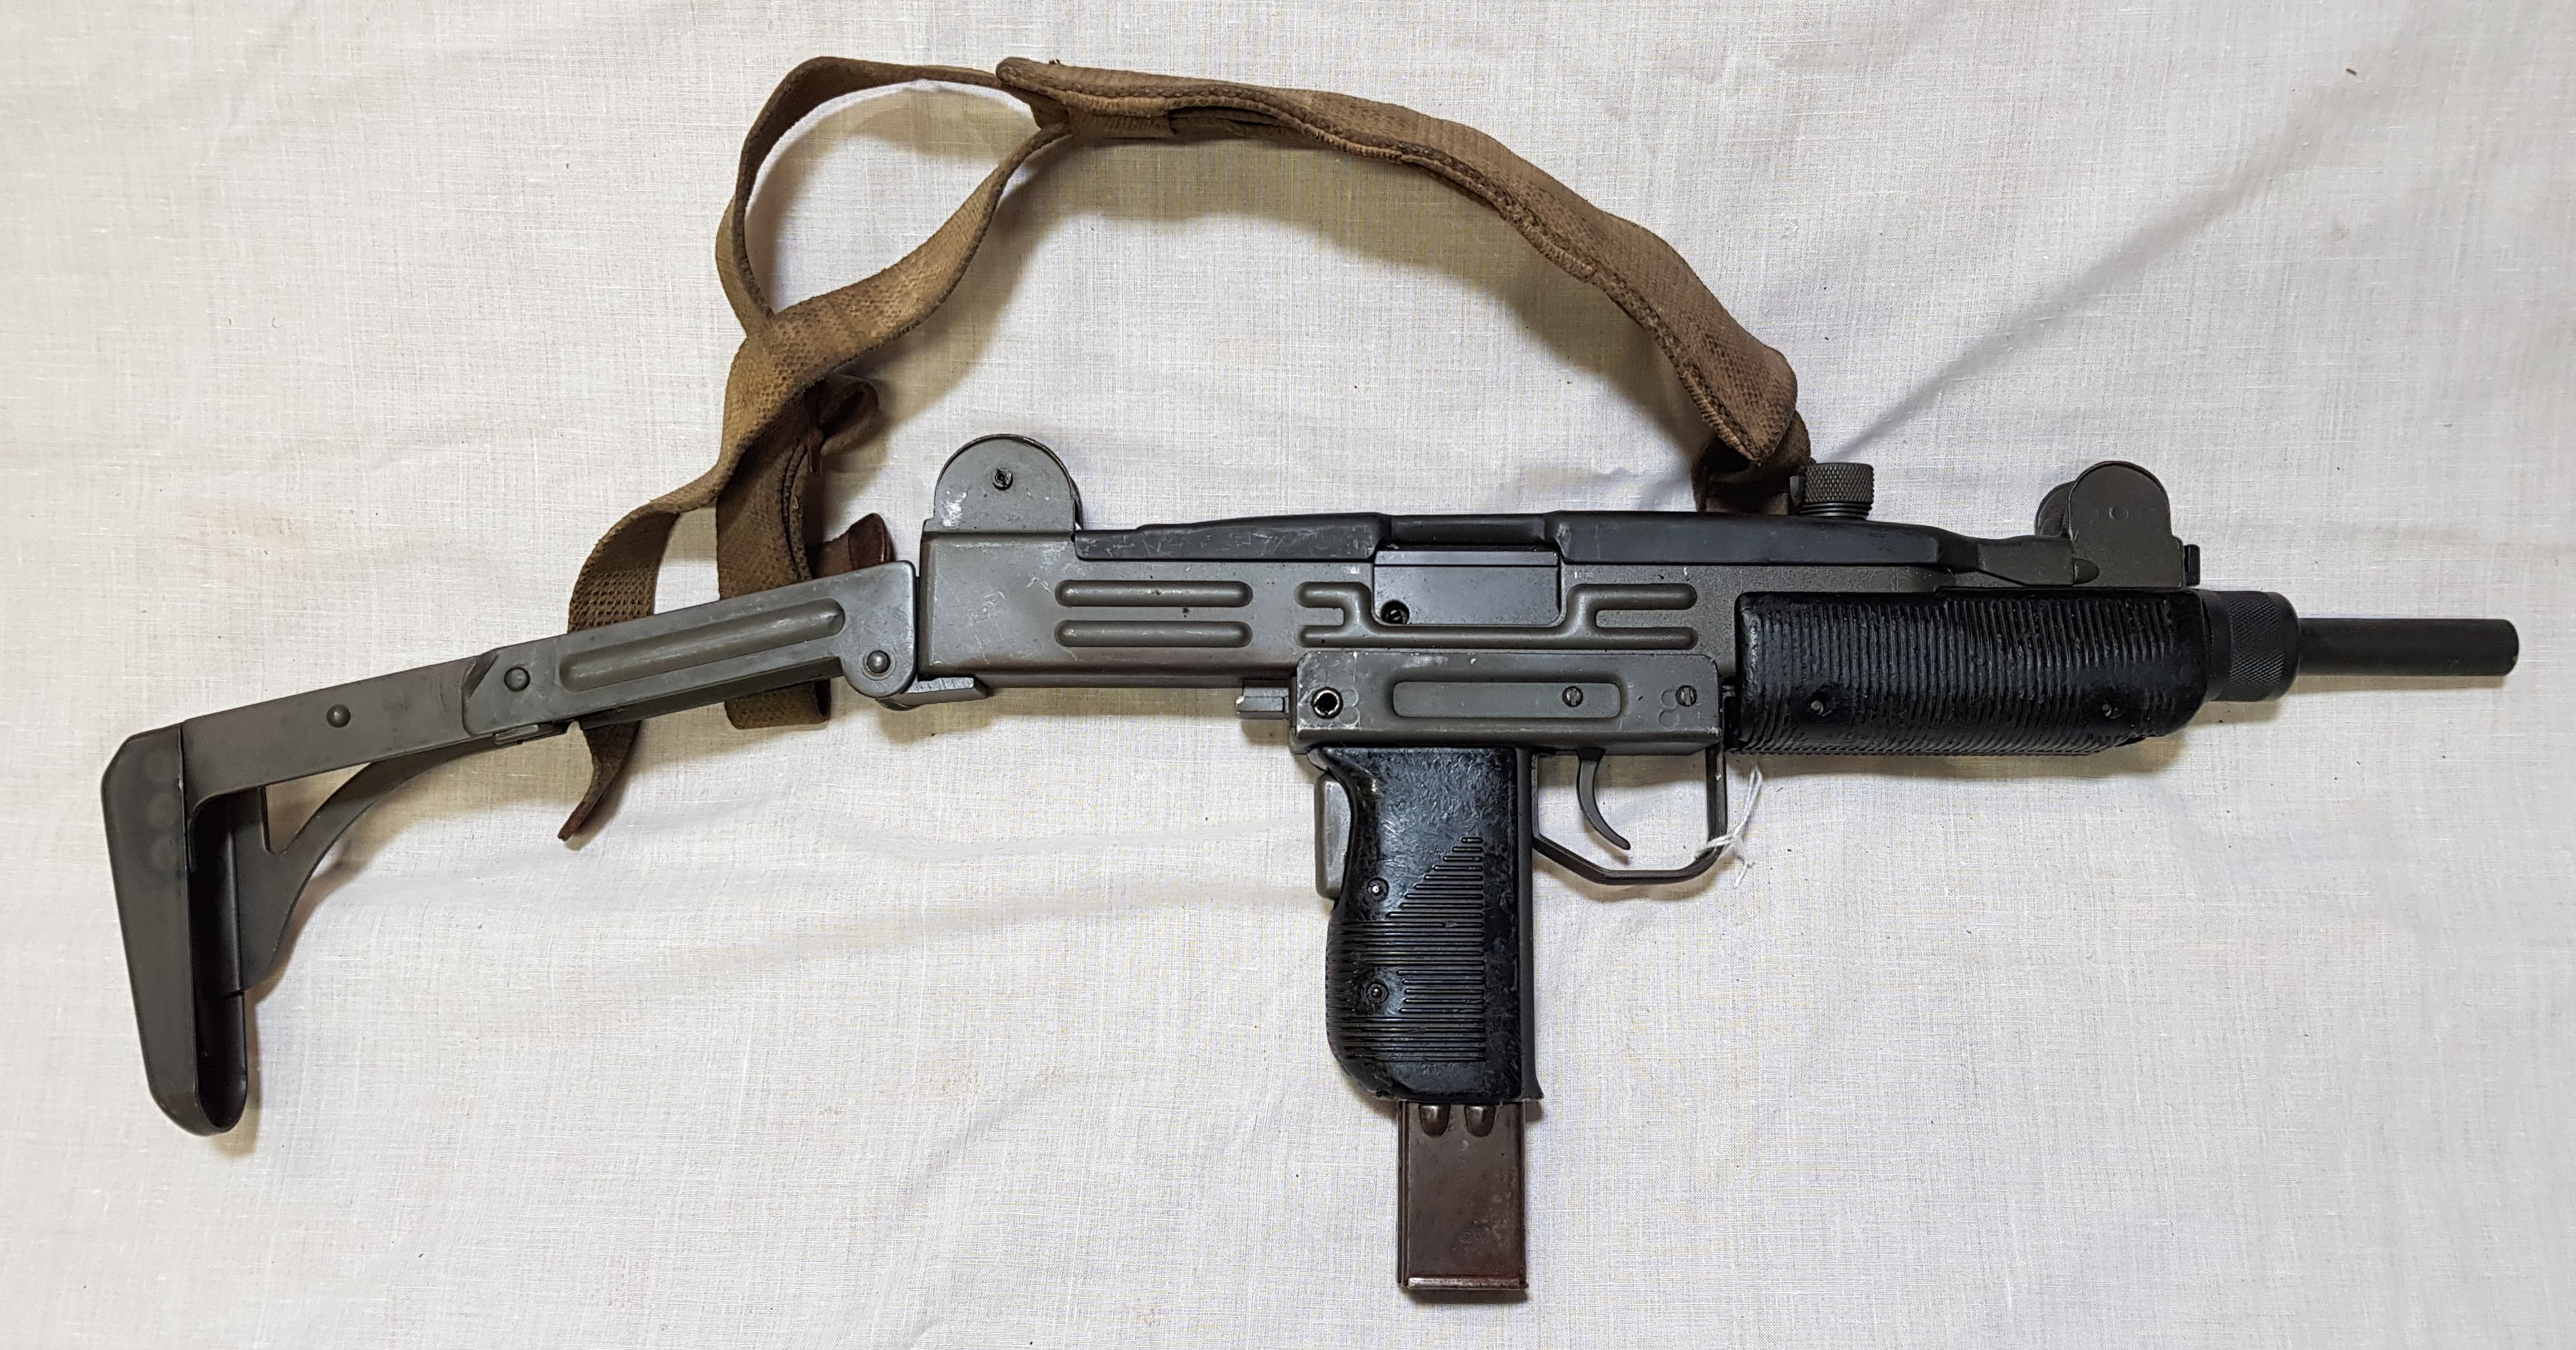 DEACTIVATED ISRAELI IMI UZI SMG SUB MACHINE GUN #5183939